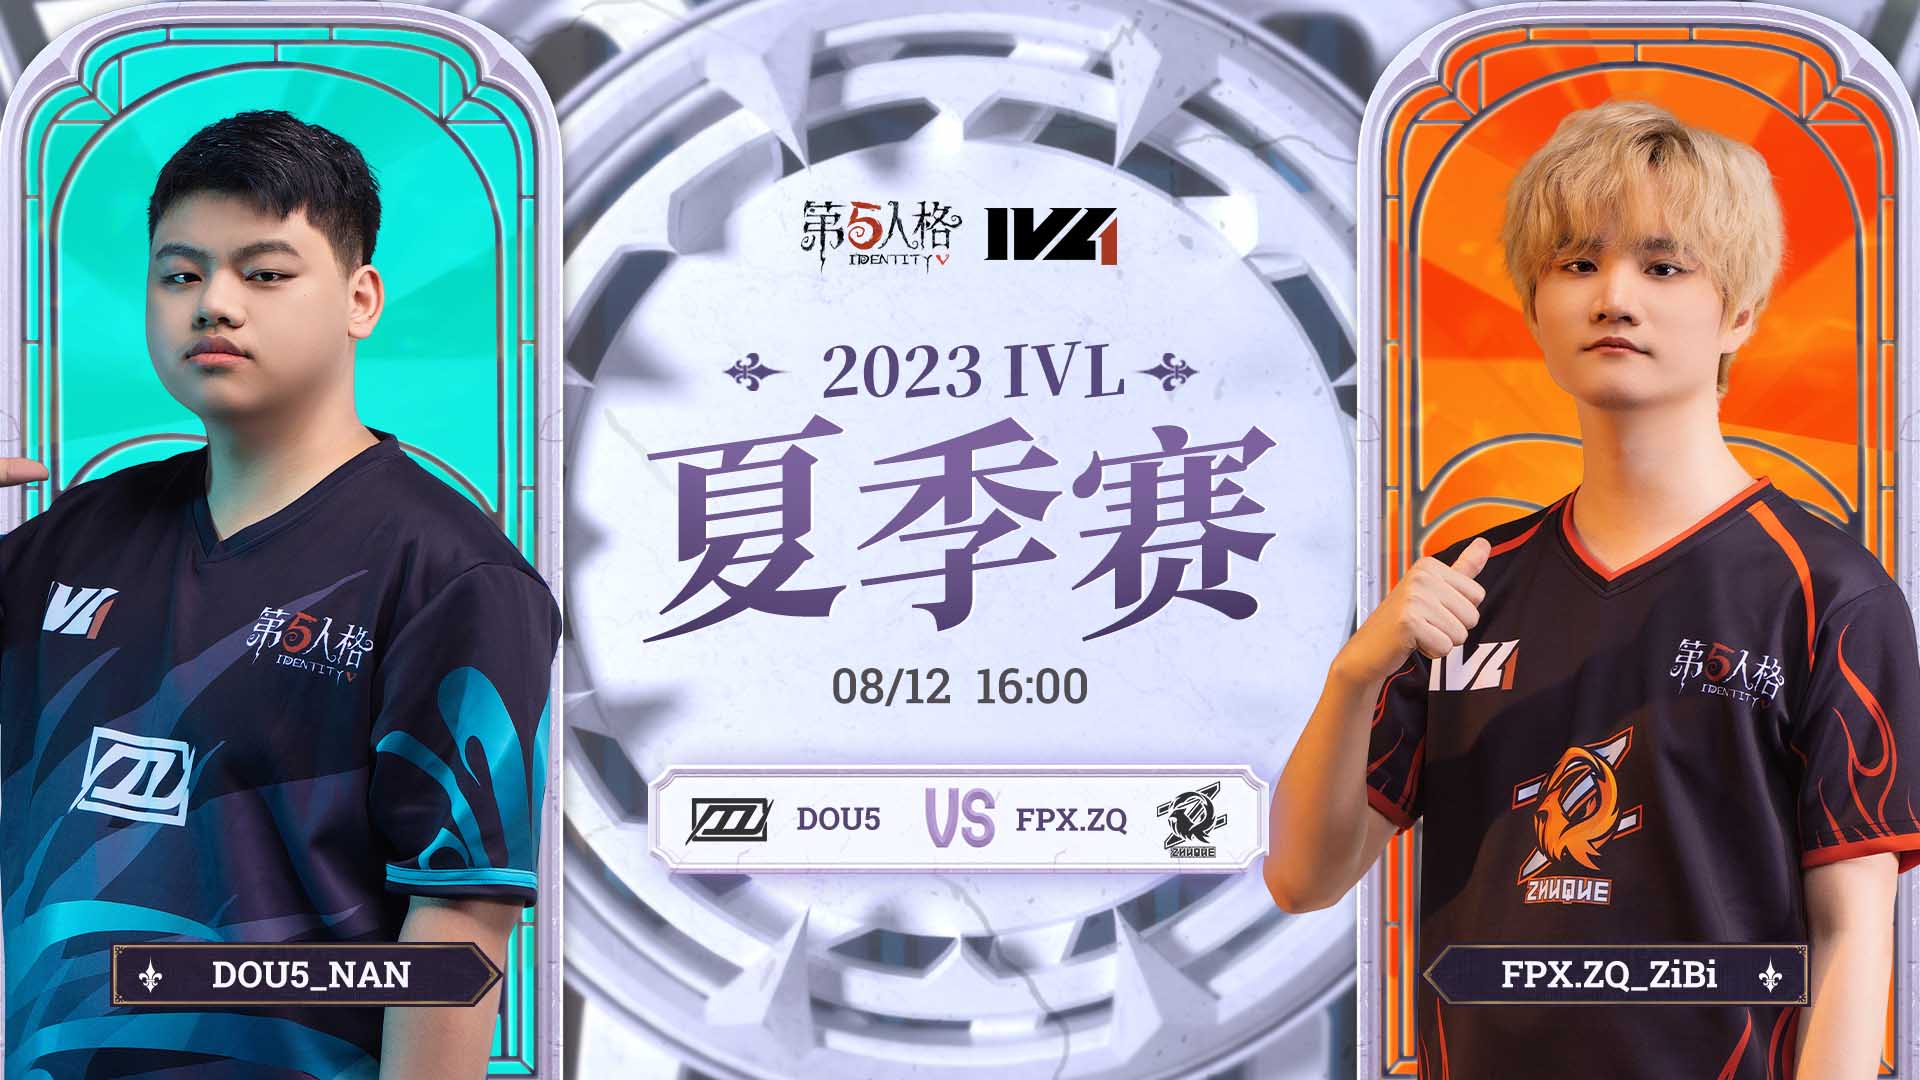 【2023IVL】夏季赛W10D2录像 DOU5 vs FPX.ZQ